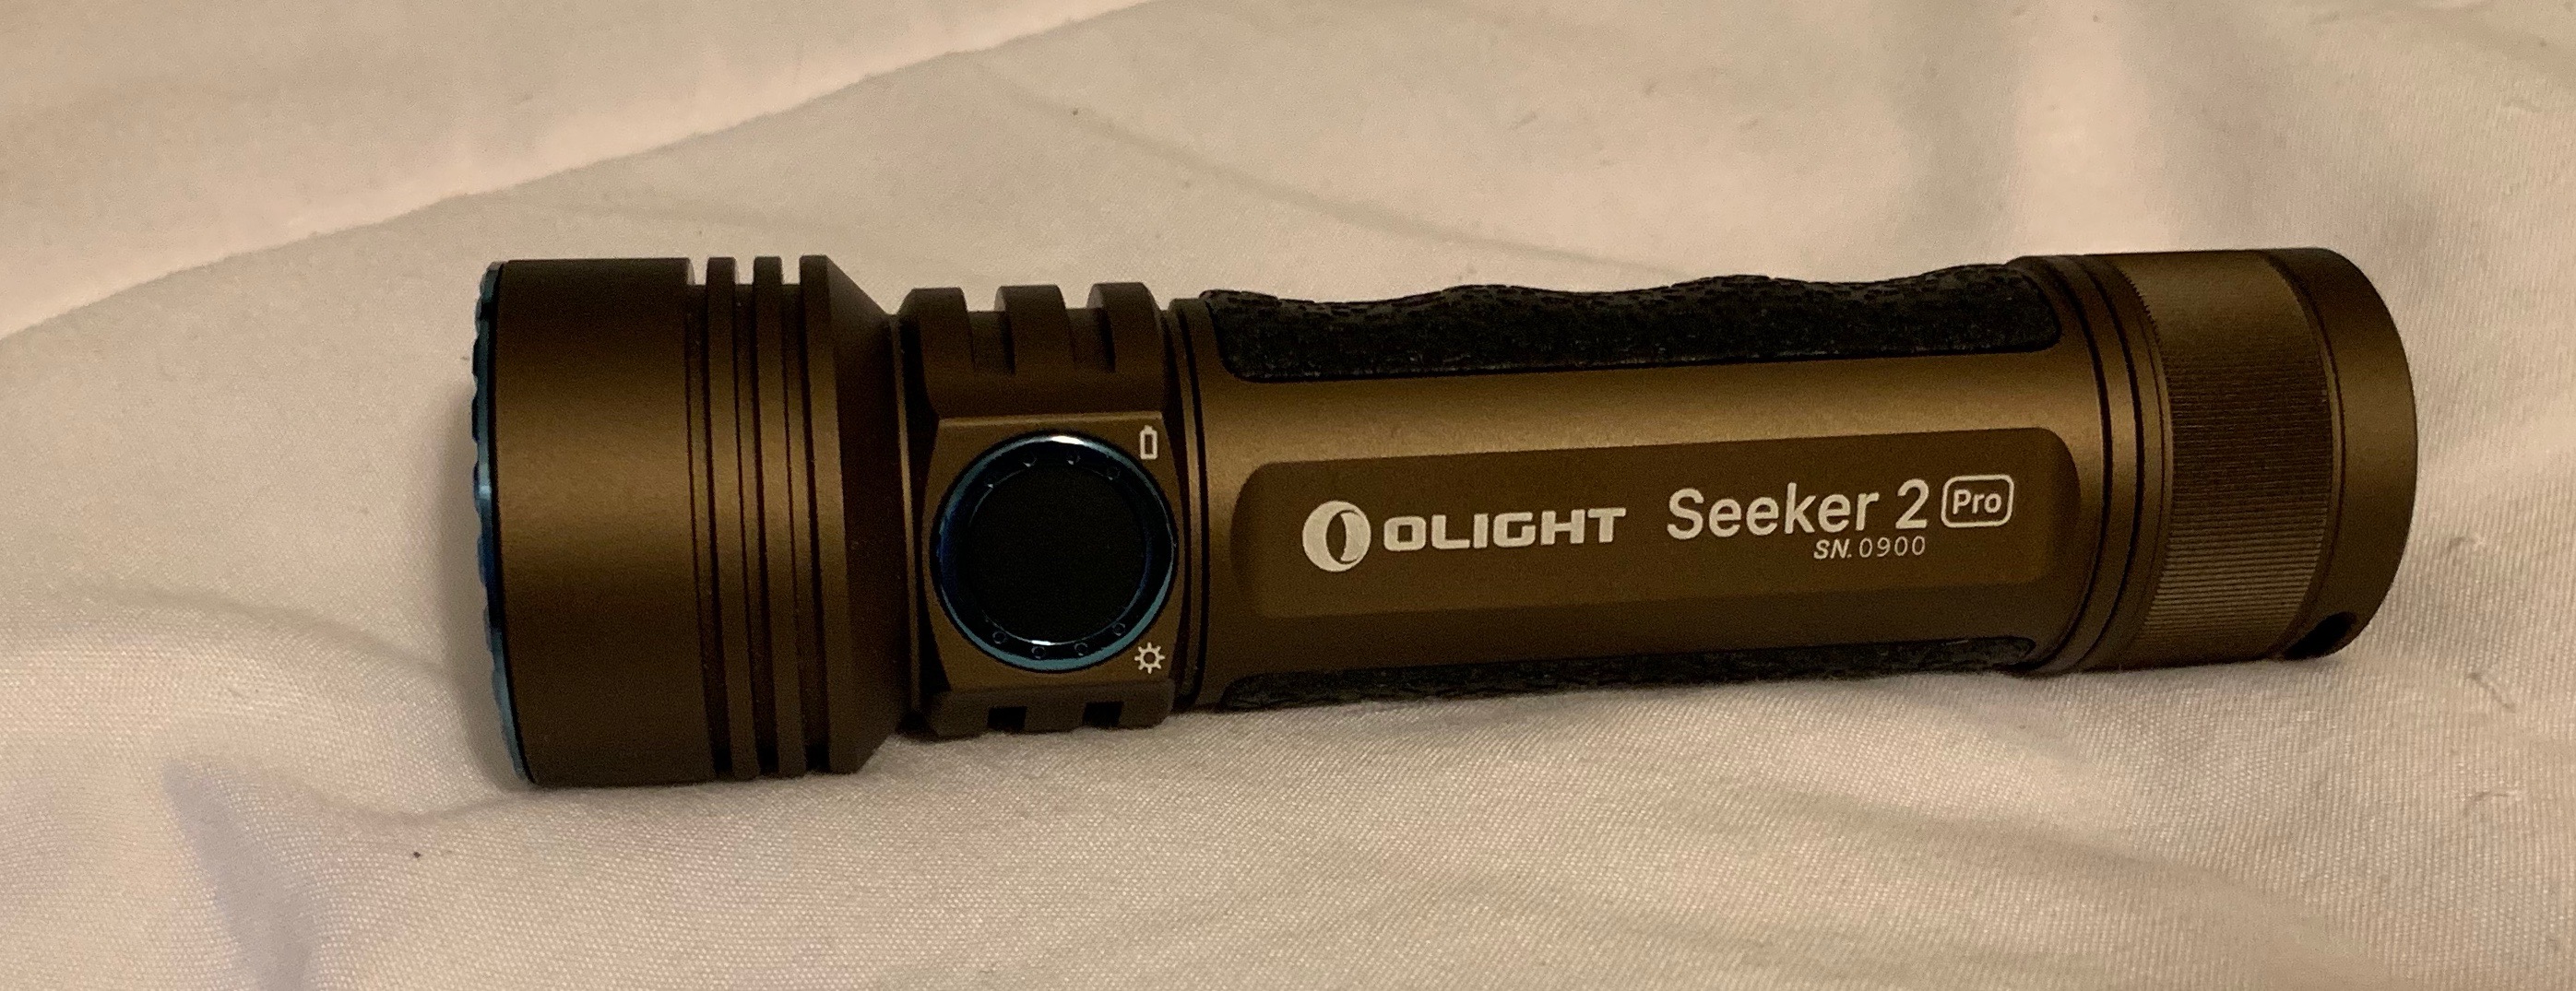 Olight Seeker 2 Pro Review - John's Tech Blog